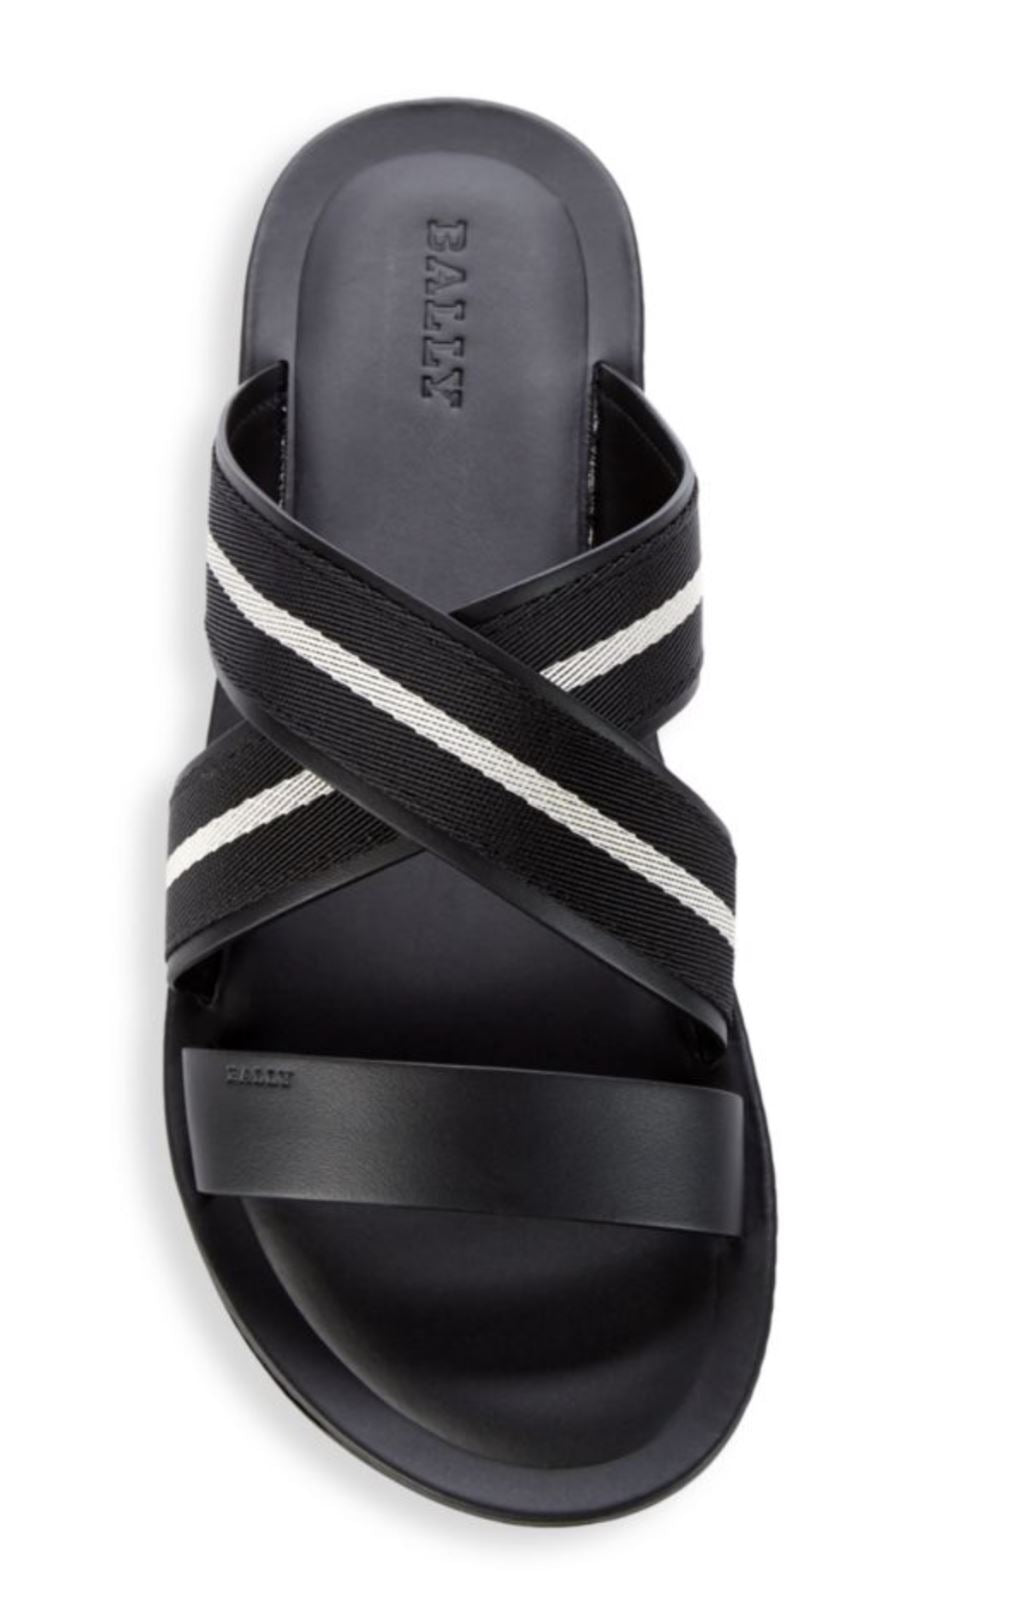 NIB $450 Bally Men's Sasha Slide Textile and Leather Black Sandals 9 US 6234150